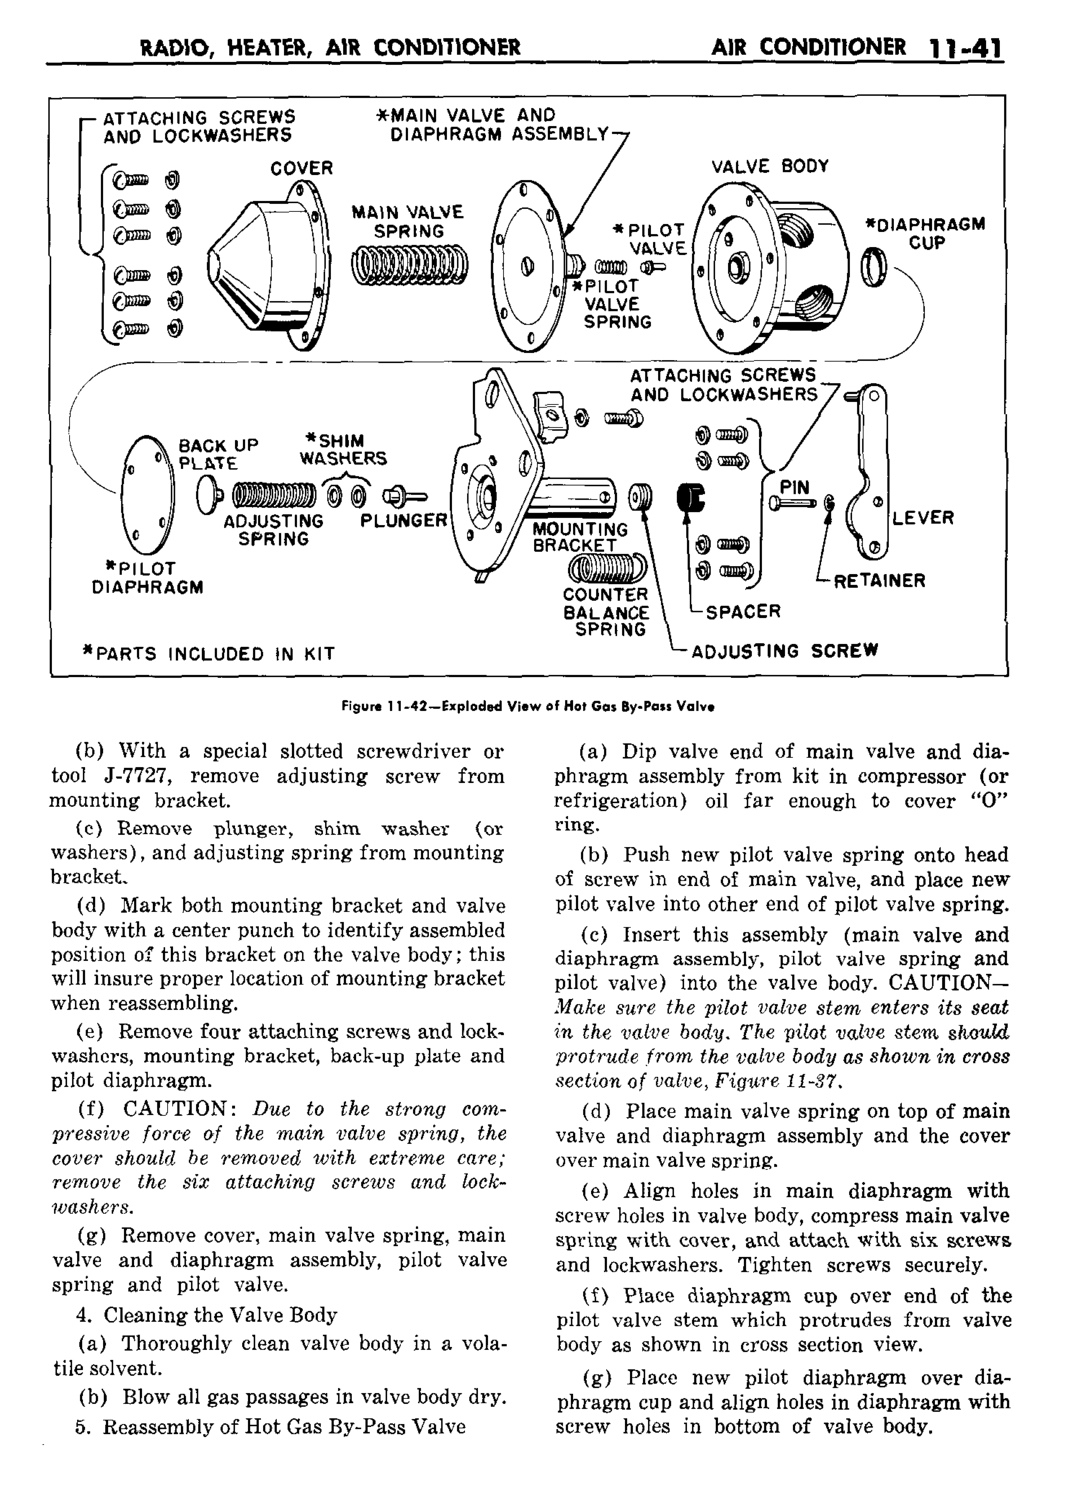 n_12 1959 Buick Shop Manual - Radio-Heater-AC-041-041.jpg